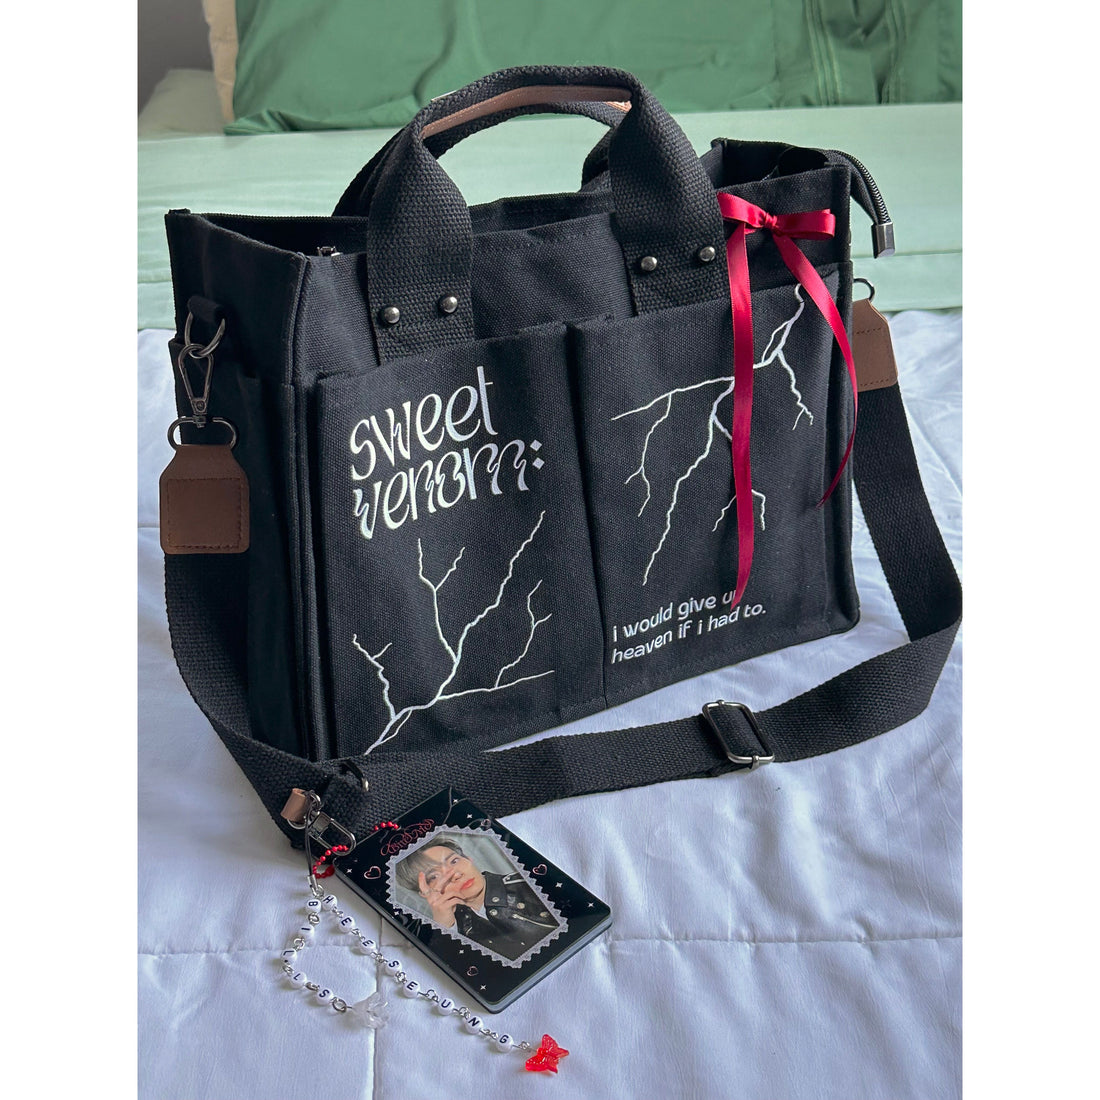 Sweet Venom Tote Bag / Canvas Tote Bag